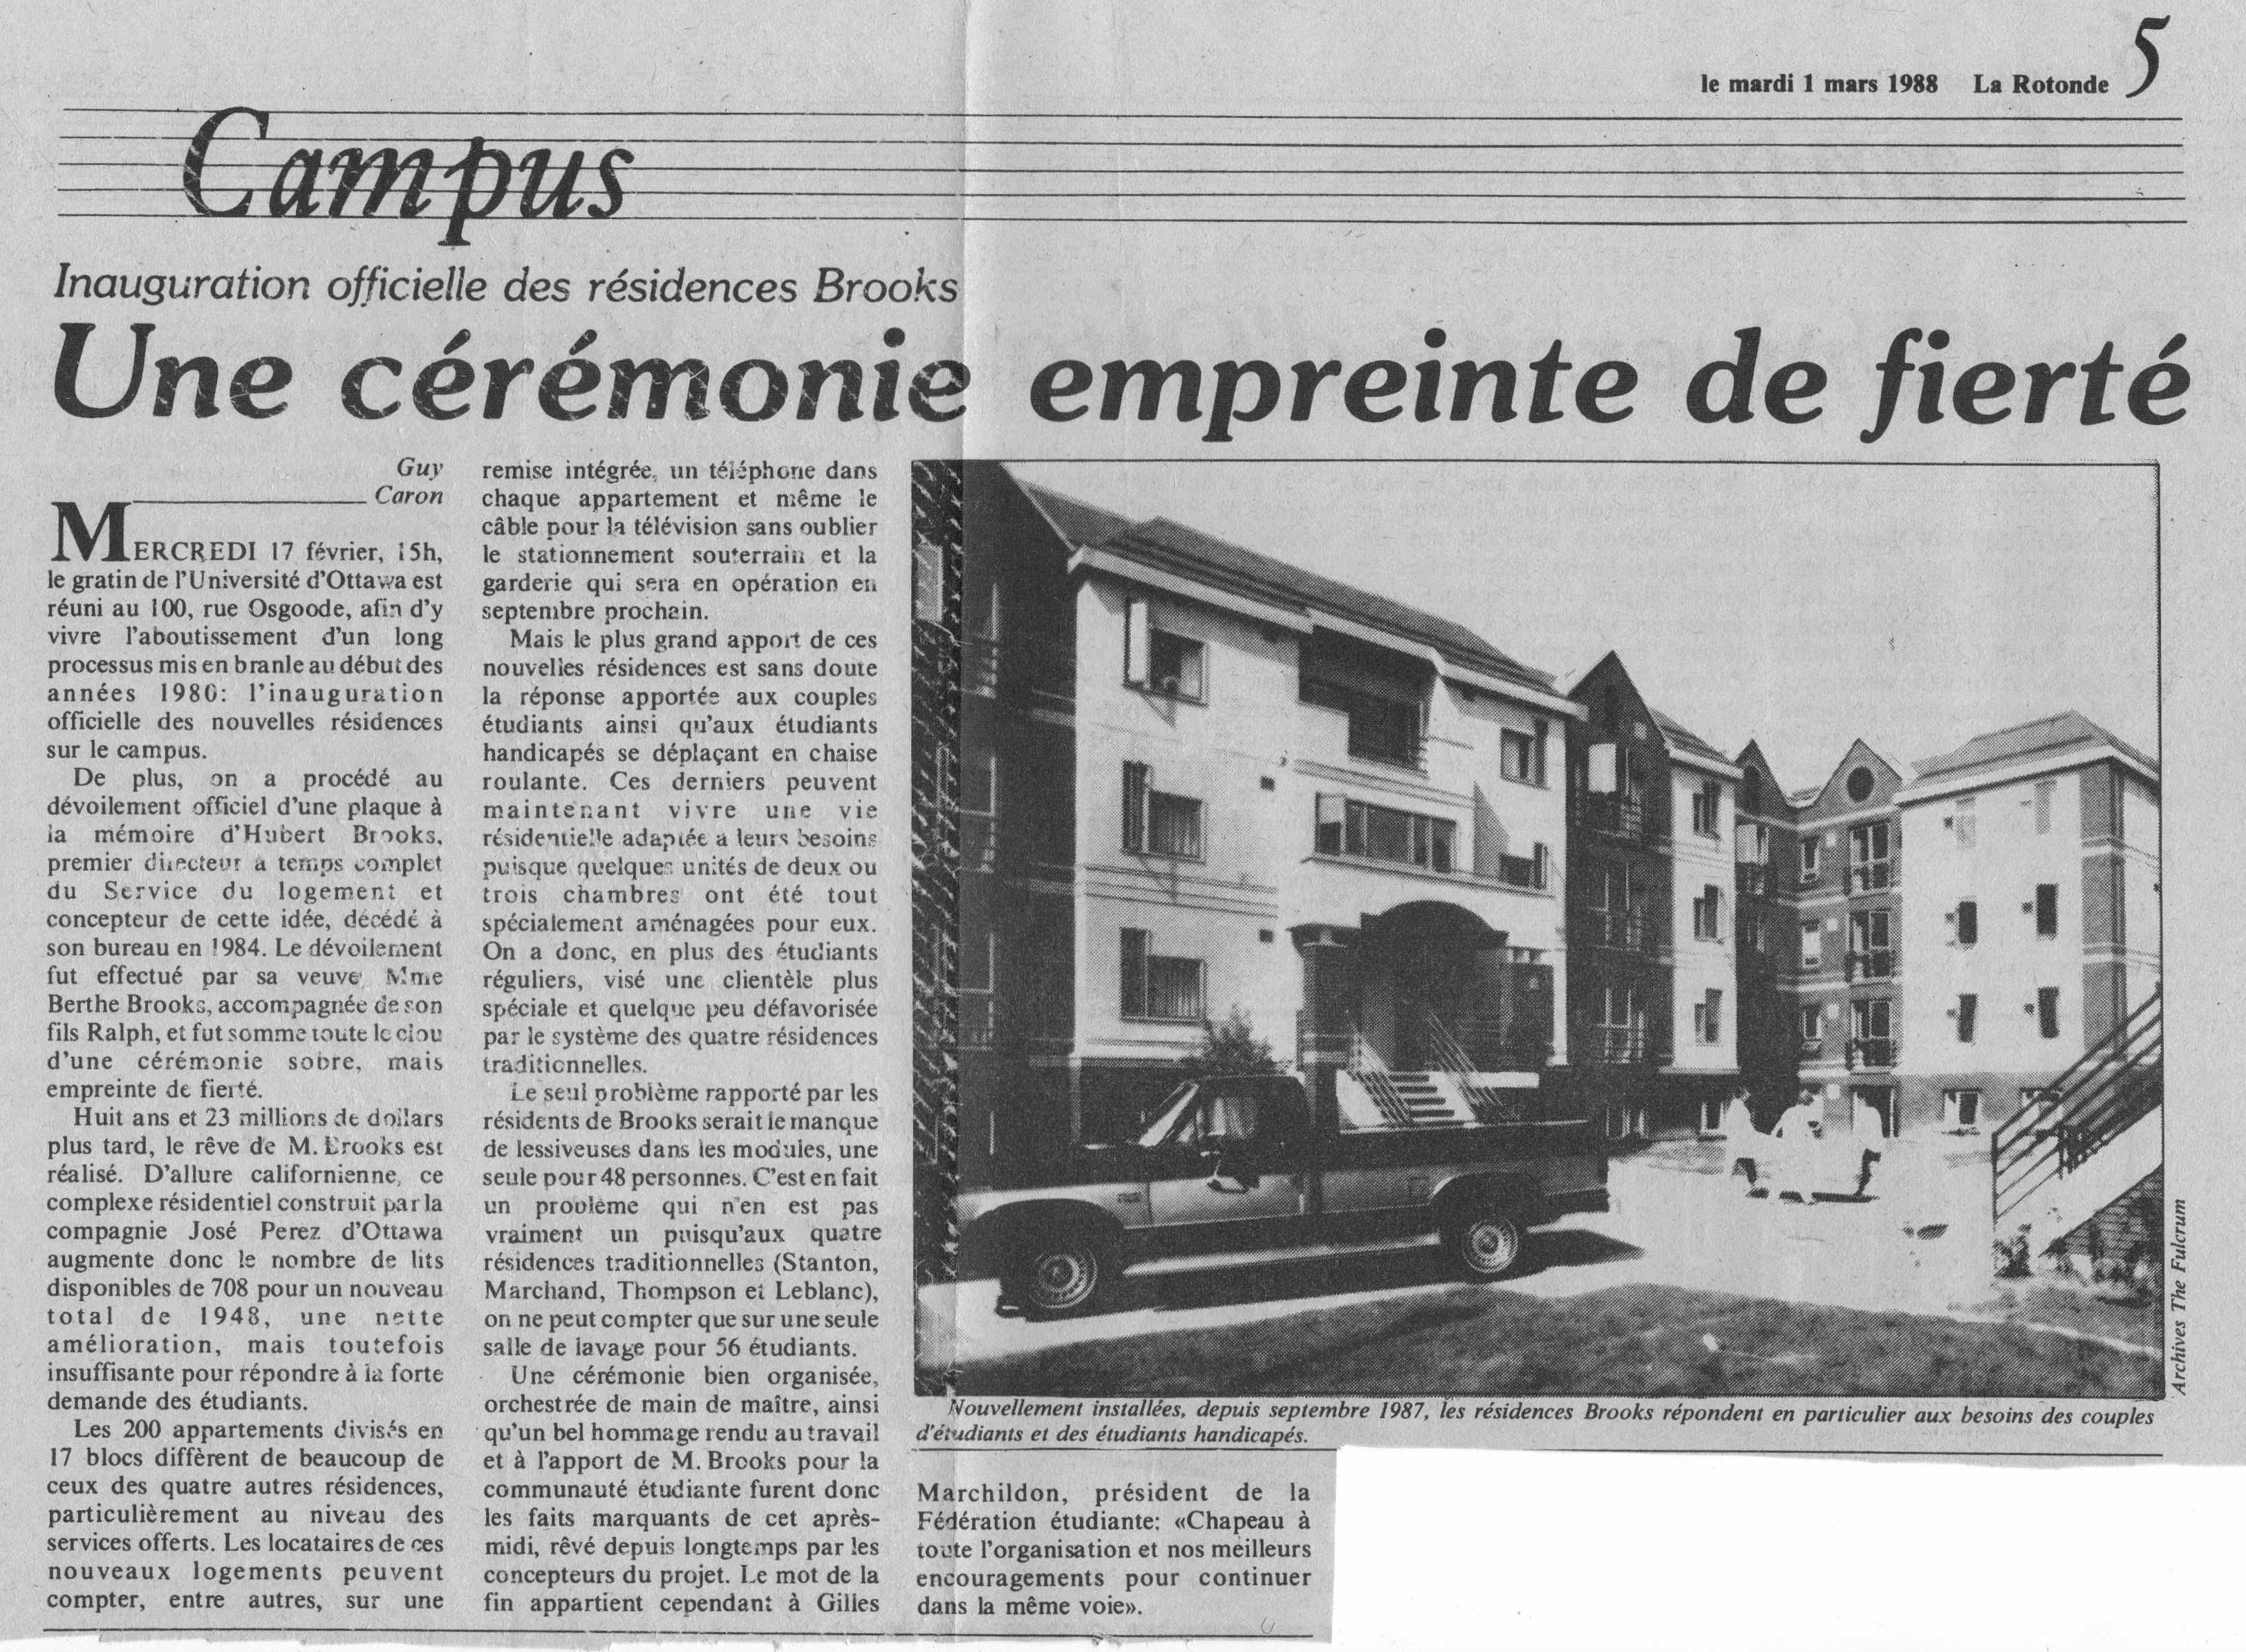 La Rotondre  Newspaper article on University of Ottawa  Brooks Residence Ceremonies